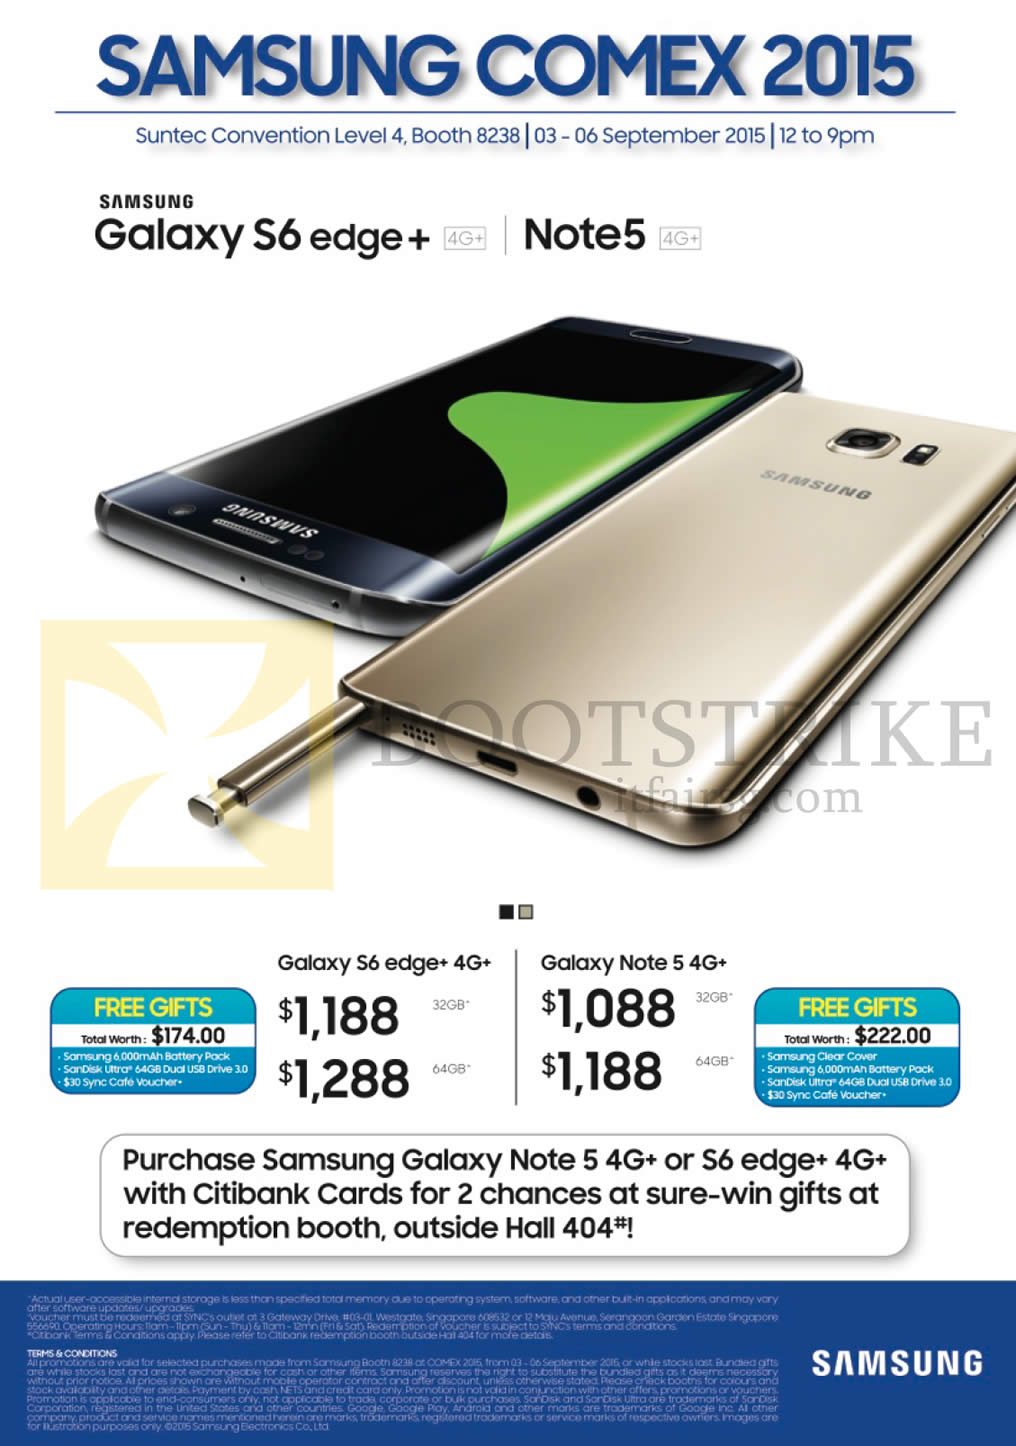 COMEX 2015 price list image brochure of Samsung Smartphones, Galaxy S6 Edge 4G, Galaxy Note 5 4G, Citibank Specials